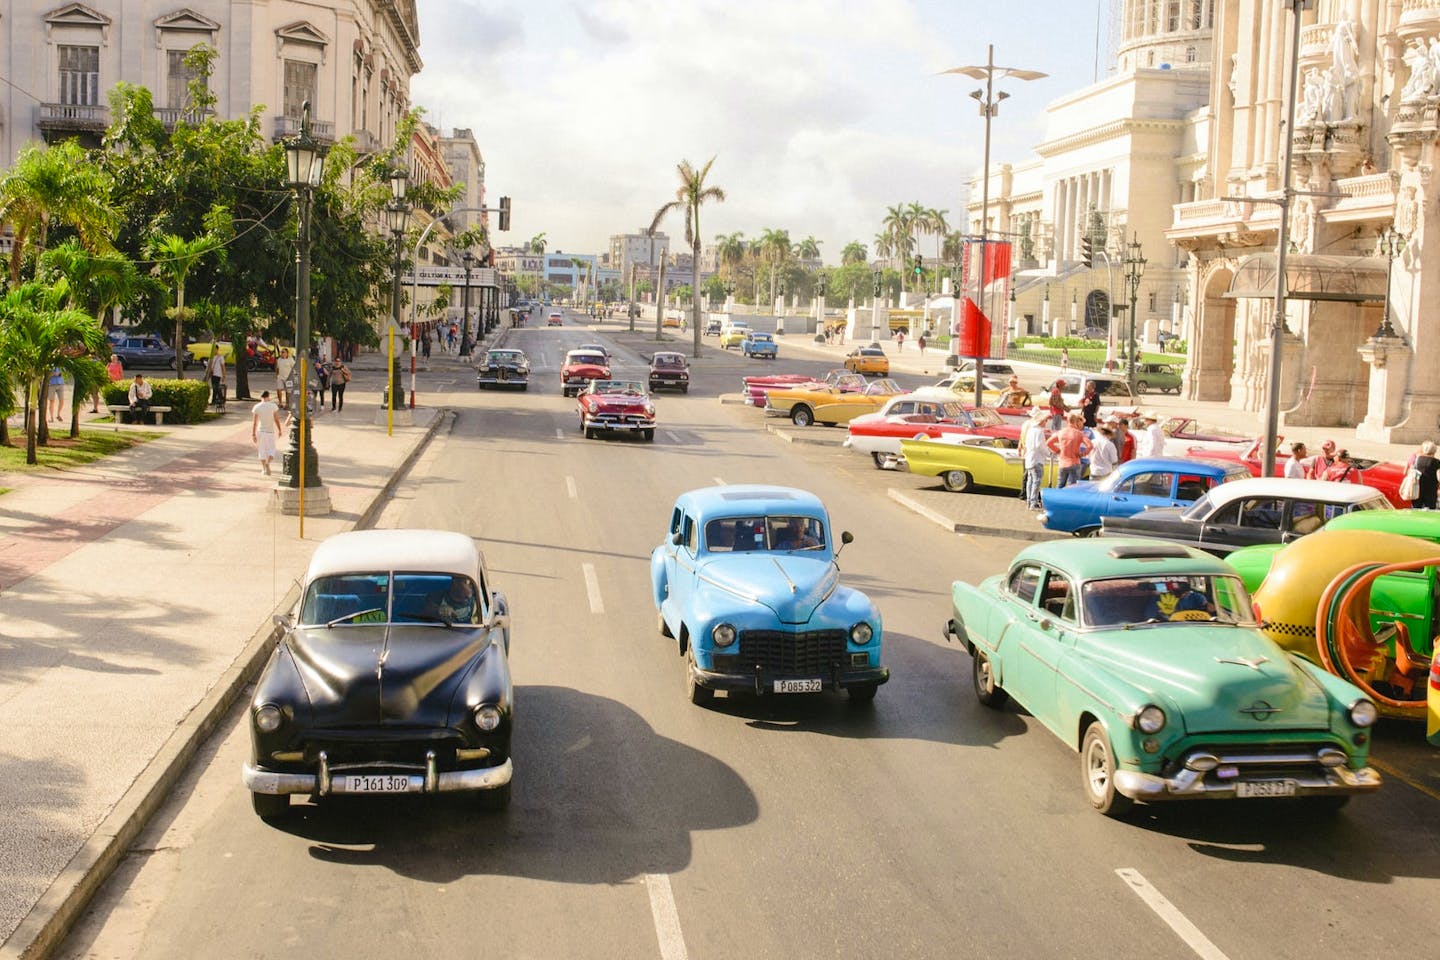 Coliving in Cuba